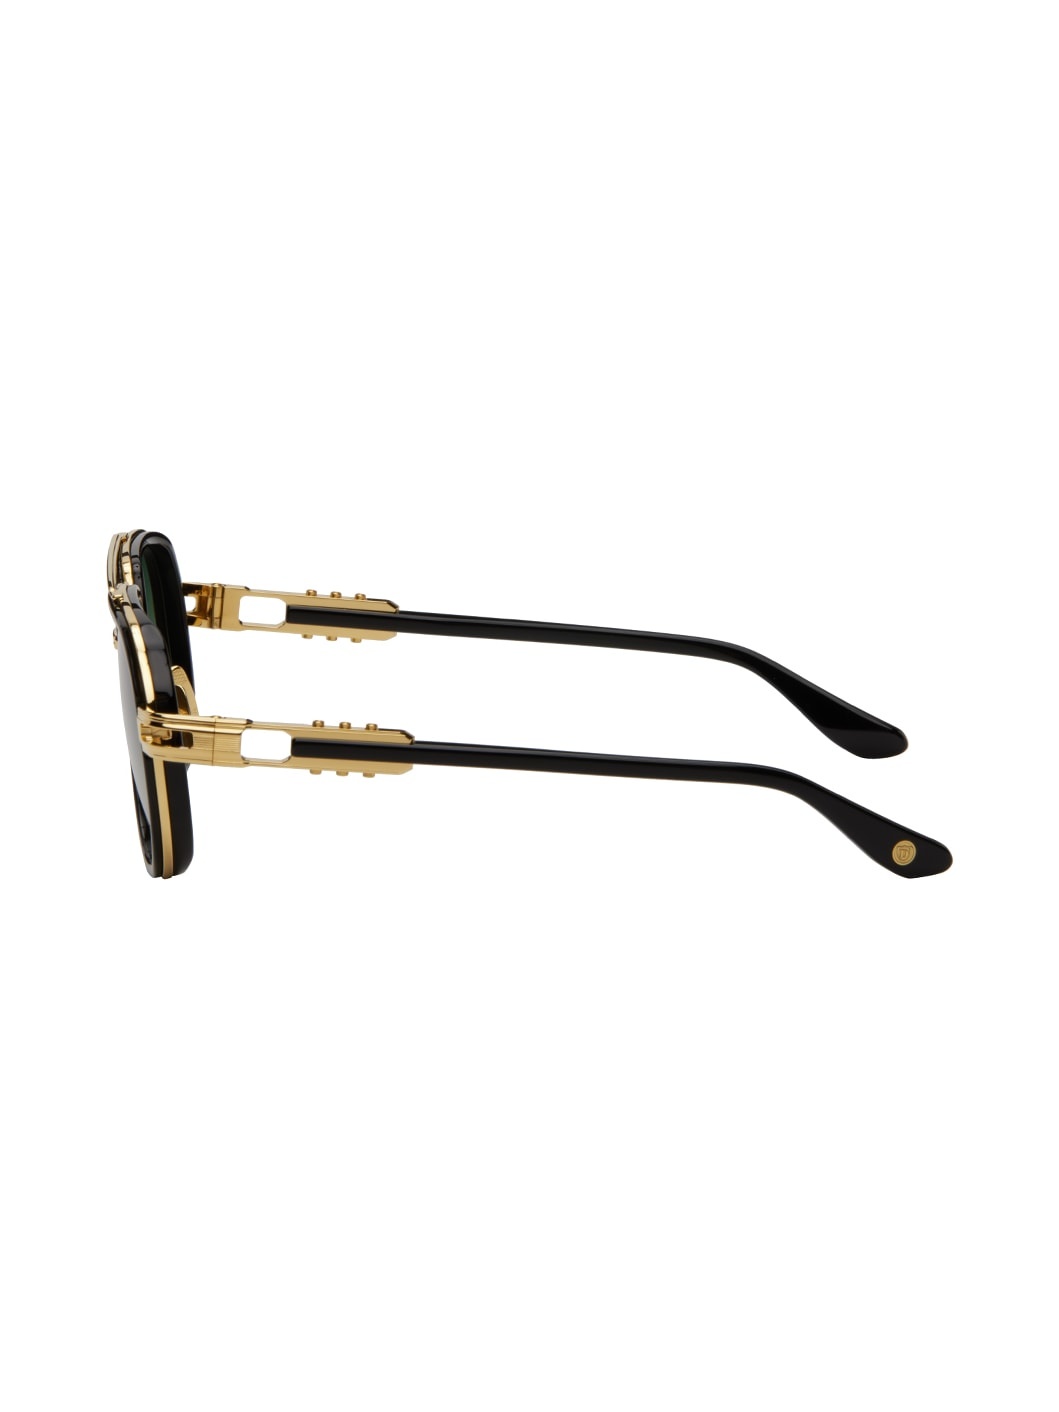 Black & Gold Vastik Sunglasses - 3